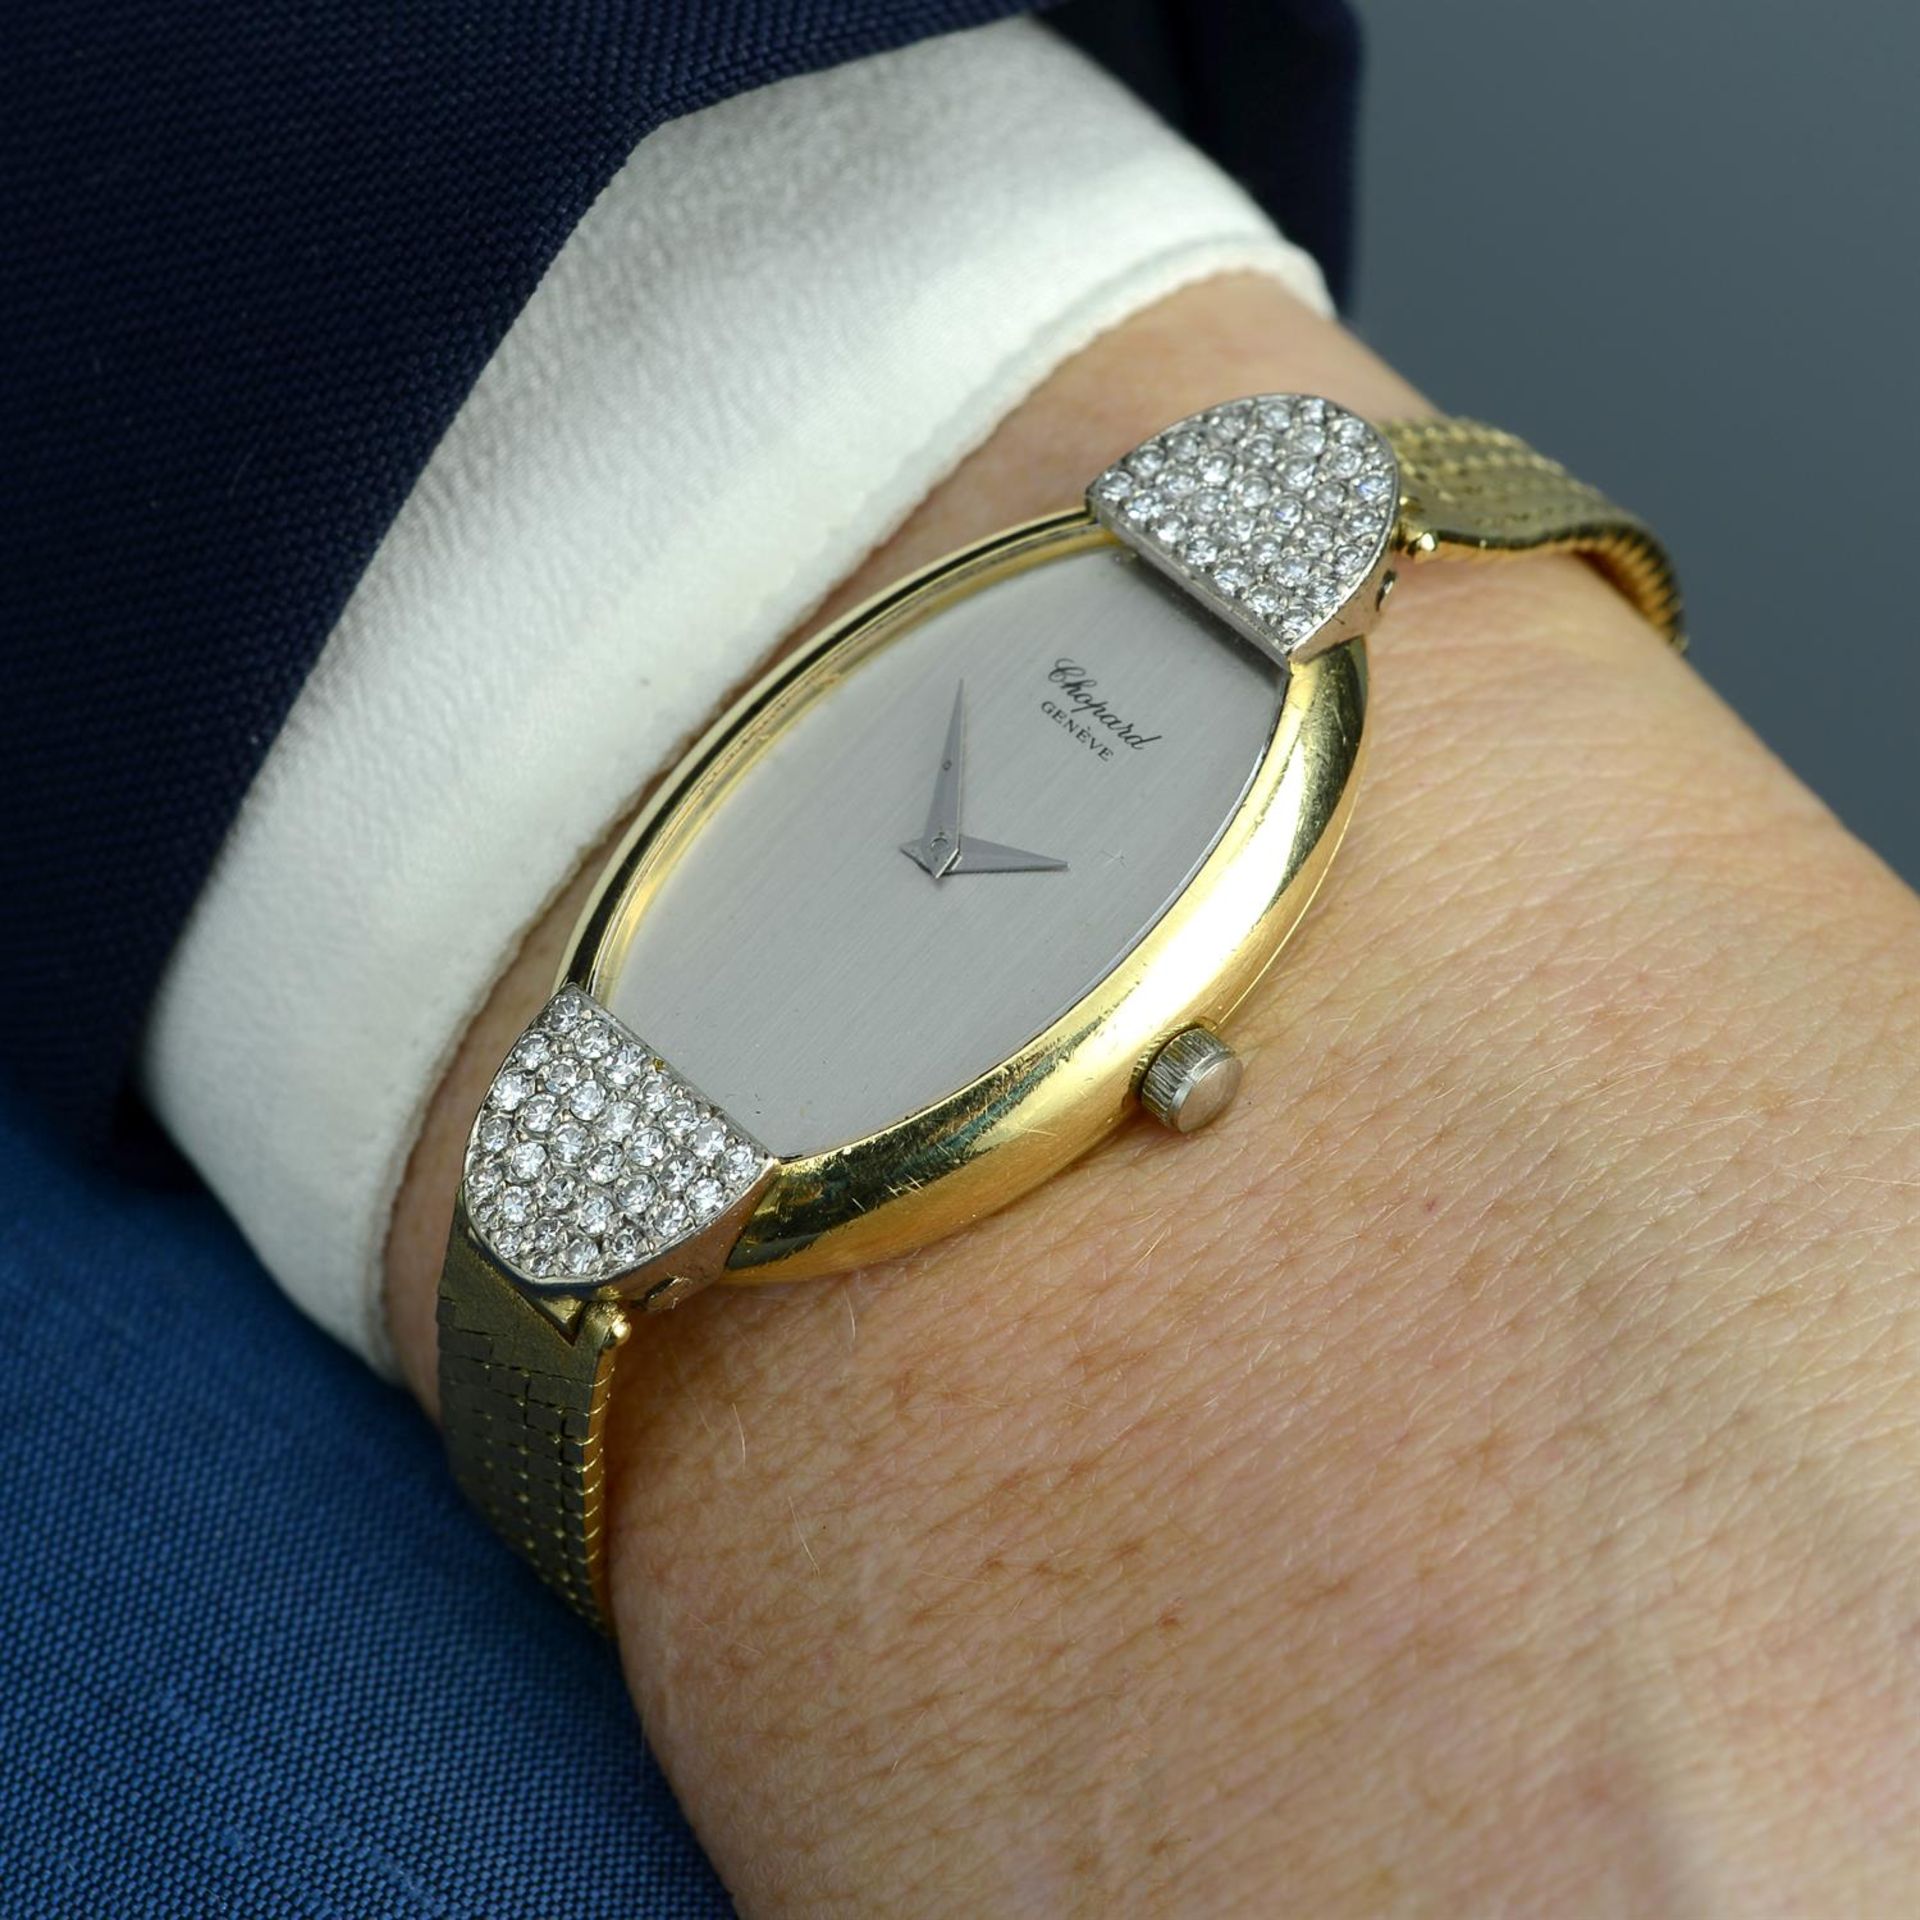 CHOPARD - a diamond set yellow metal bracelet watch, 22mm. - Image 5 of 5